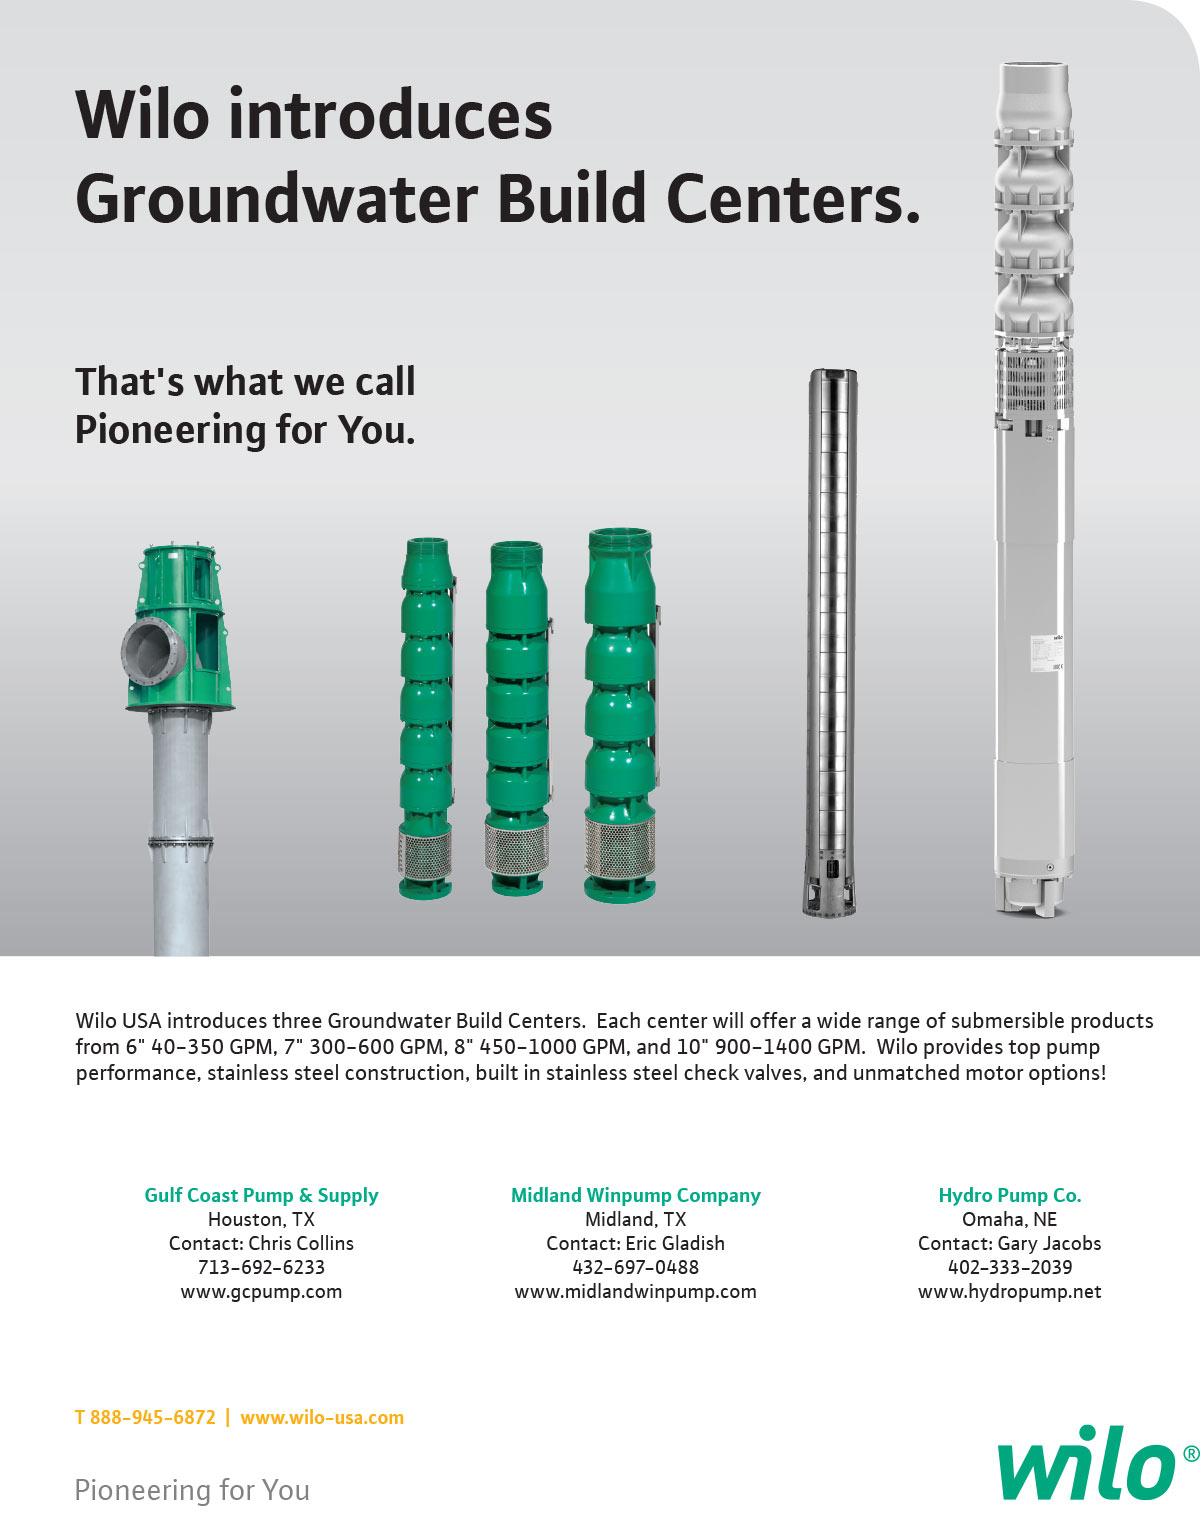 BuildCenterAnnouncement_Groundwater0416